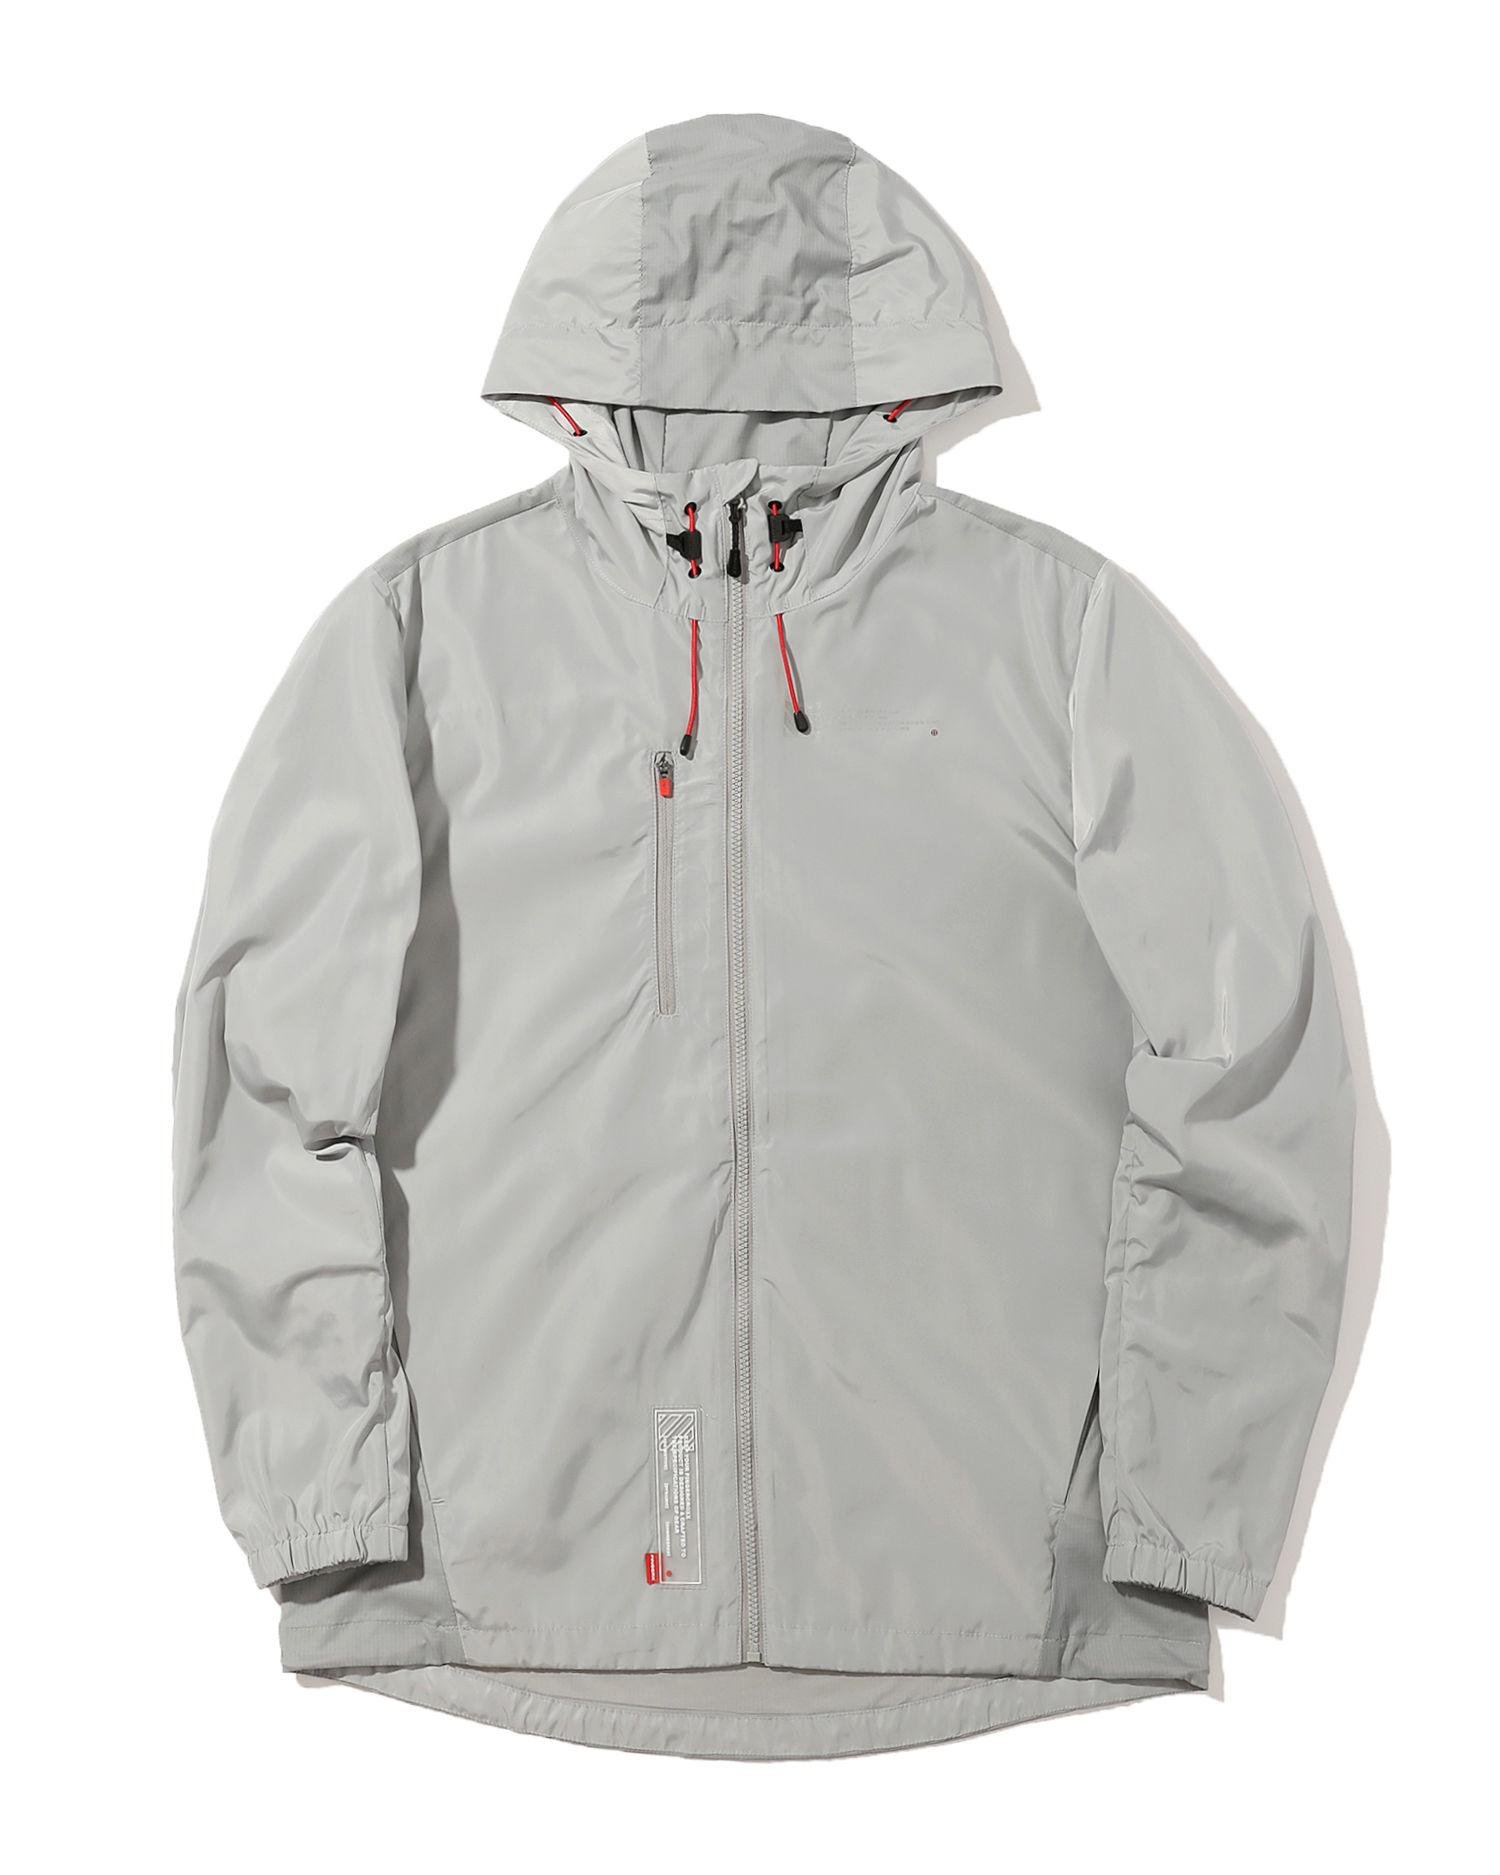 Lightweight hoodied jacket by FINGERCROXX